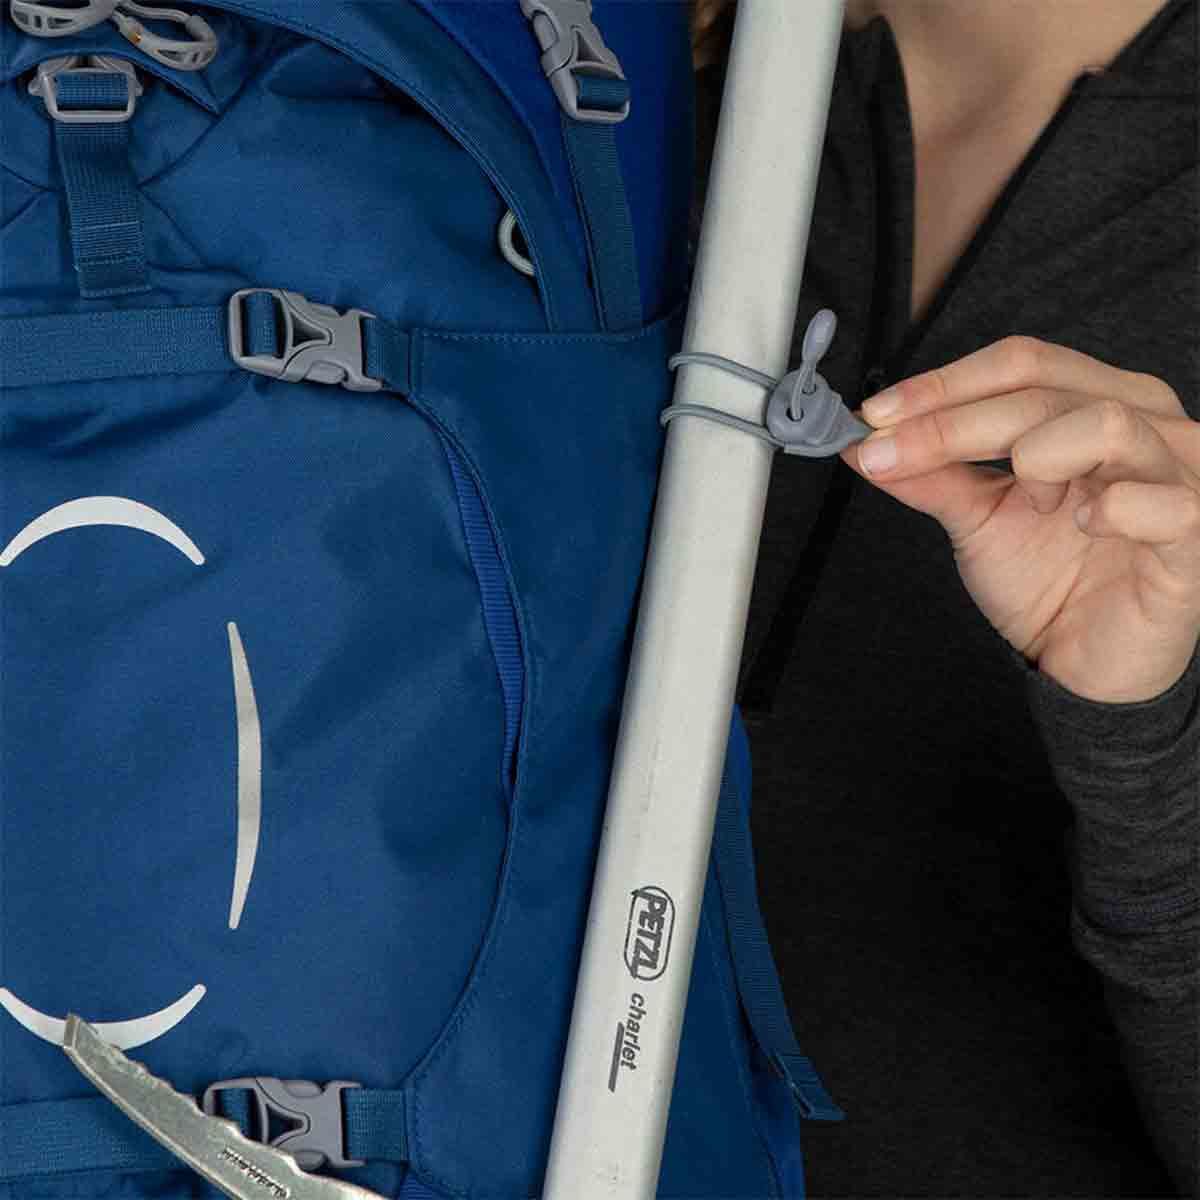 Osprey Ariel 55 backpacking backpack - Women